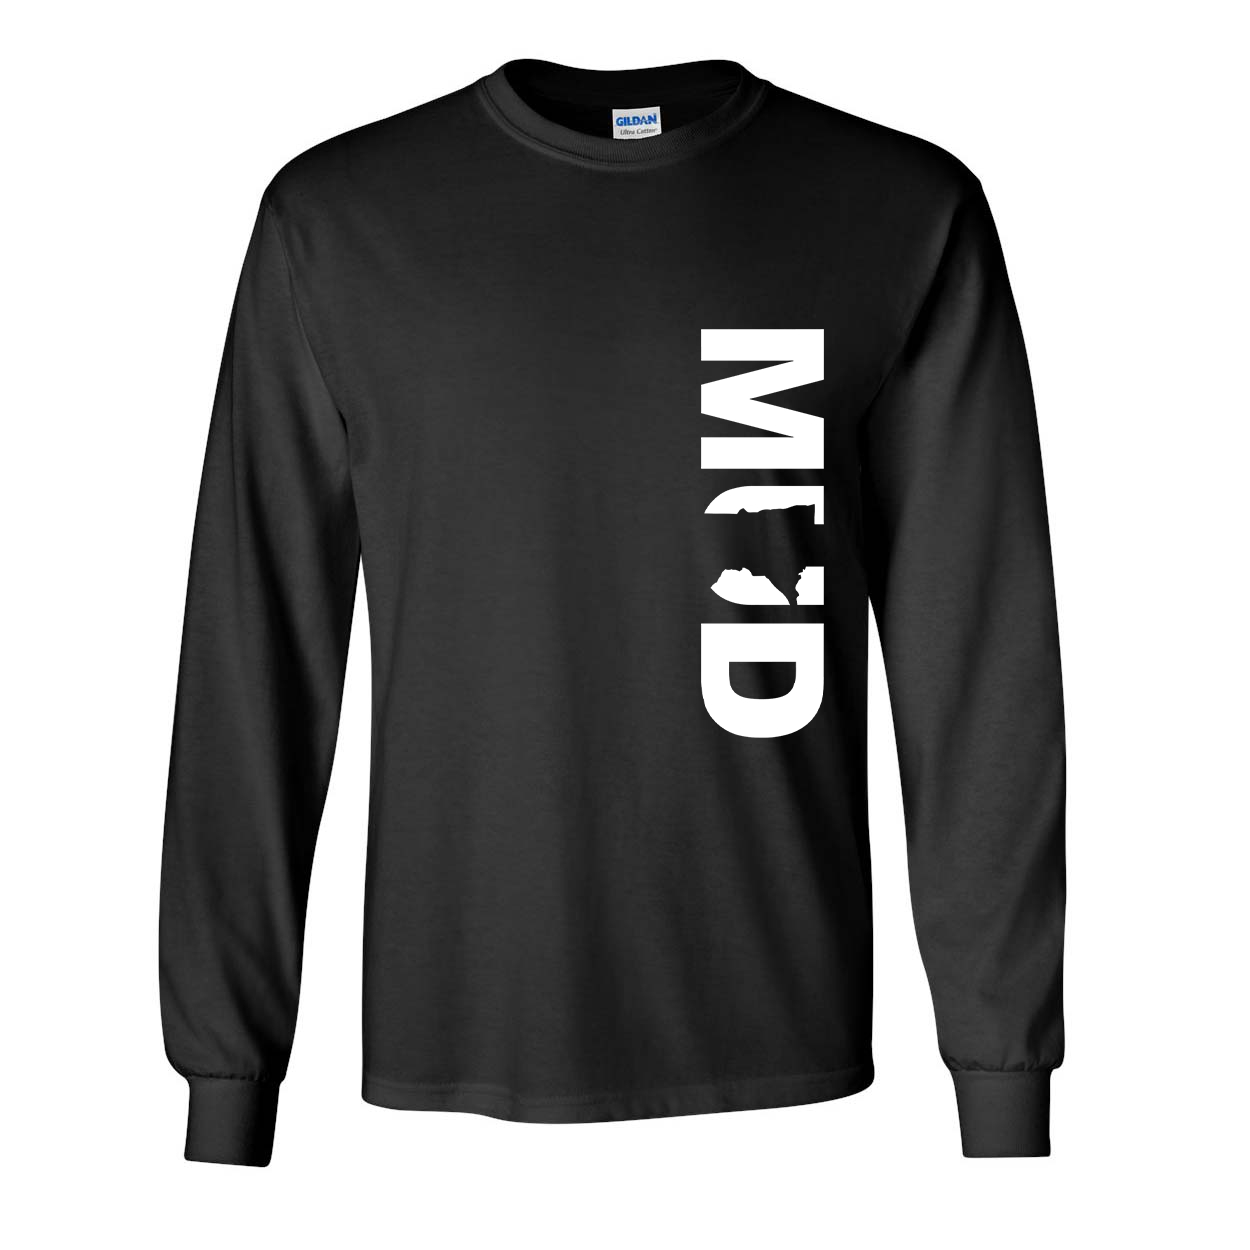 Mud Minnesota Classic Vertical Long Sleeve T-Shirt Black (White Logo)